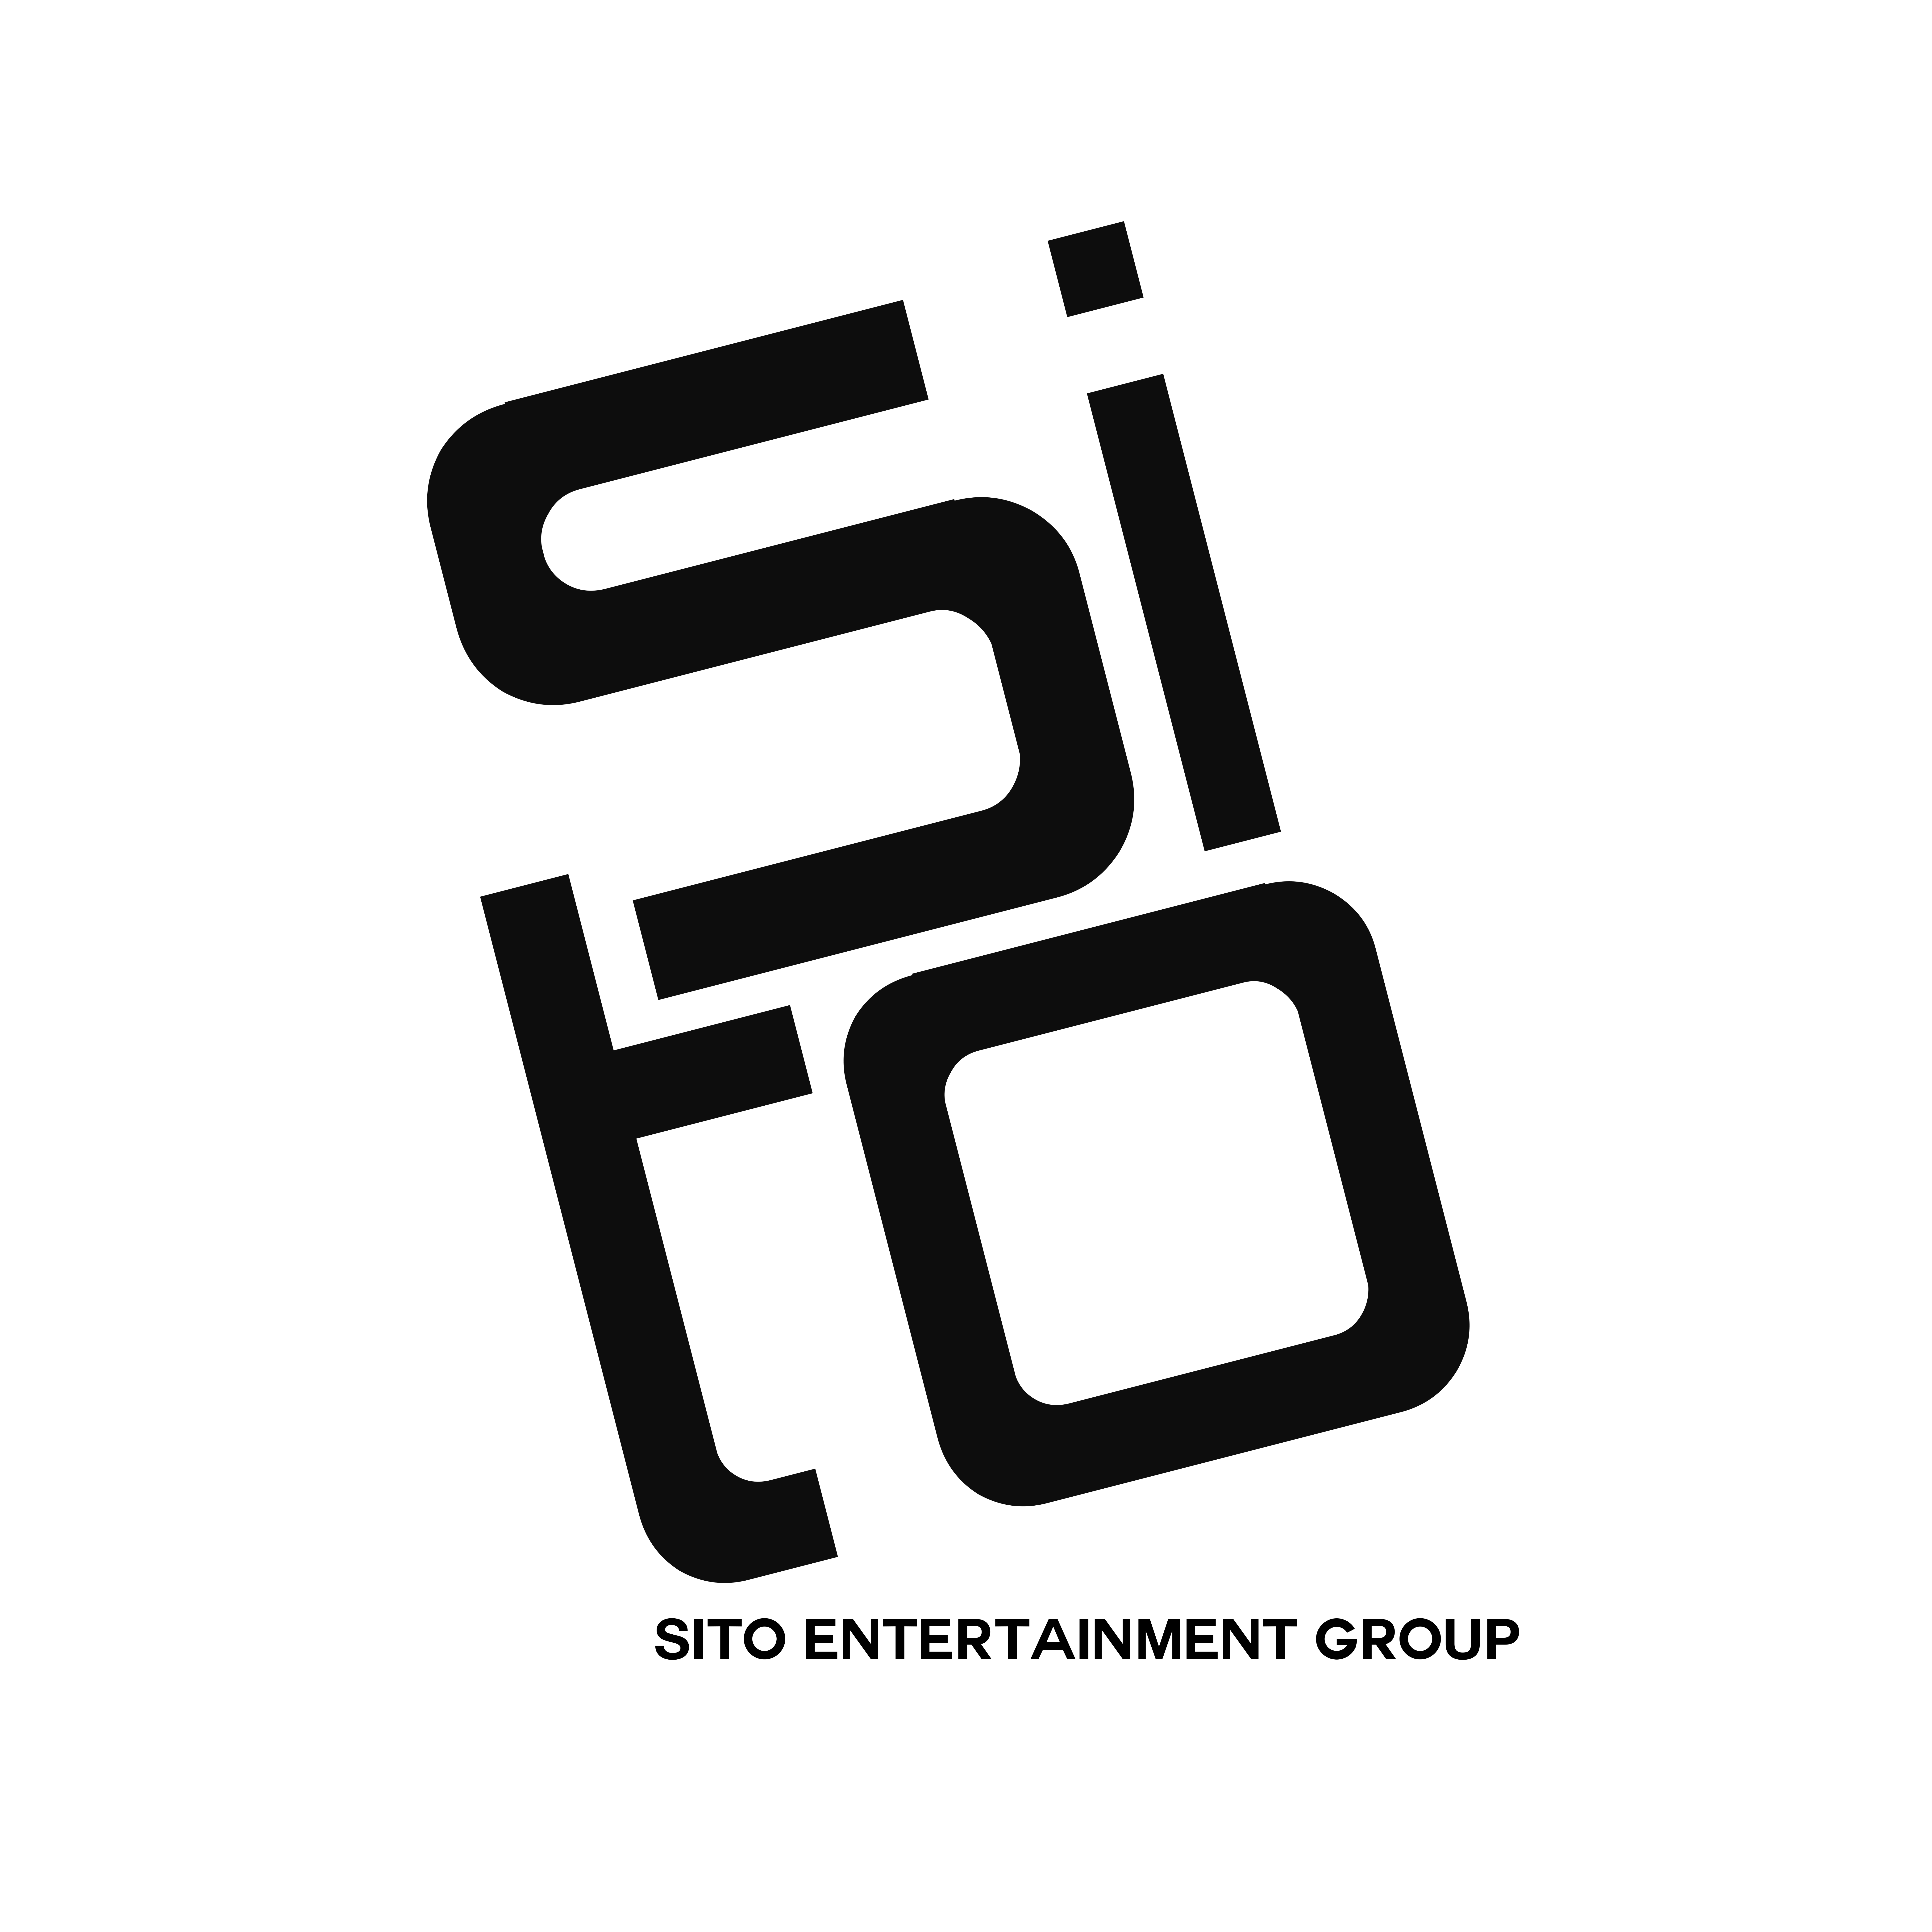 Sito Entertainment Group